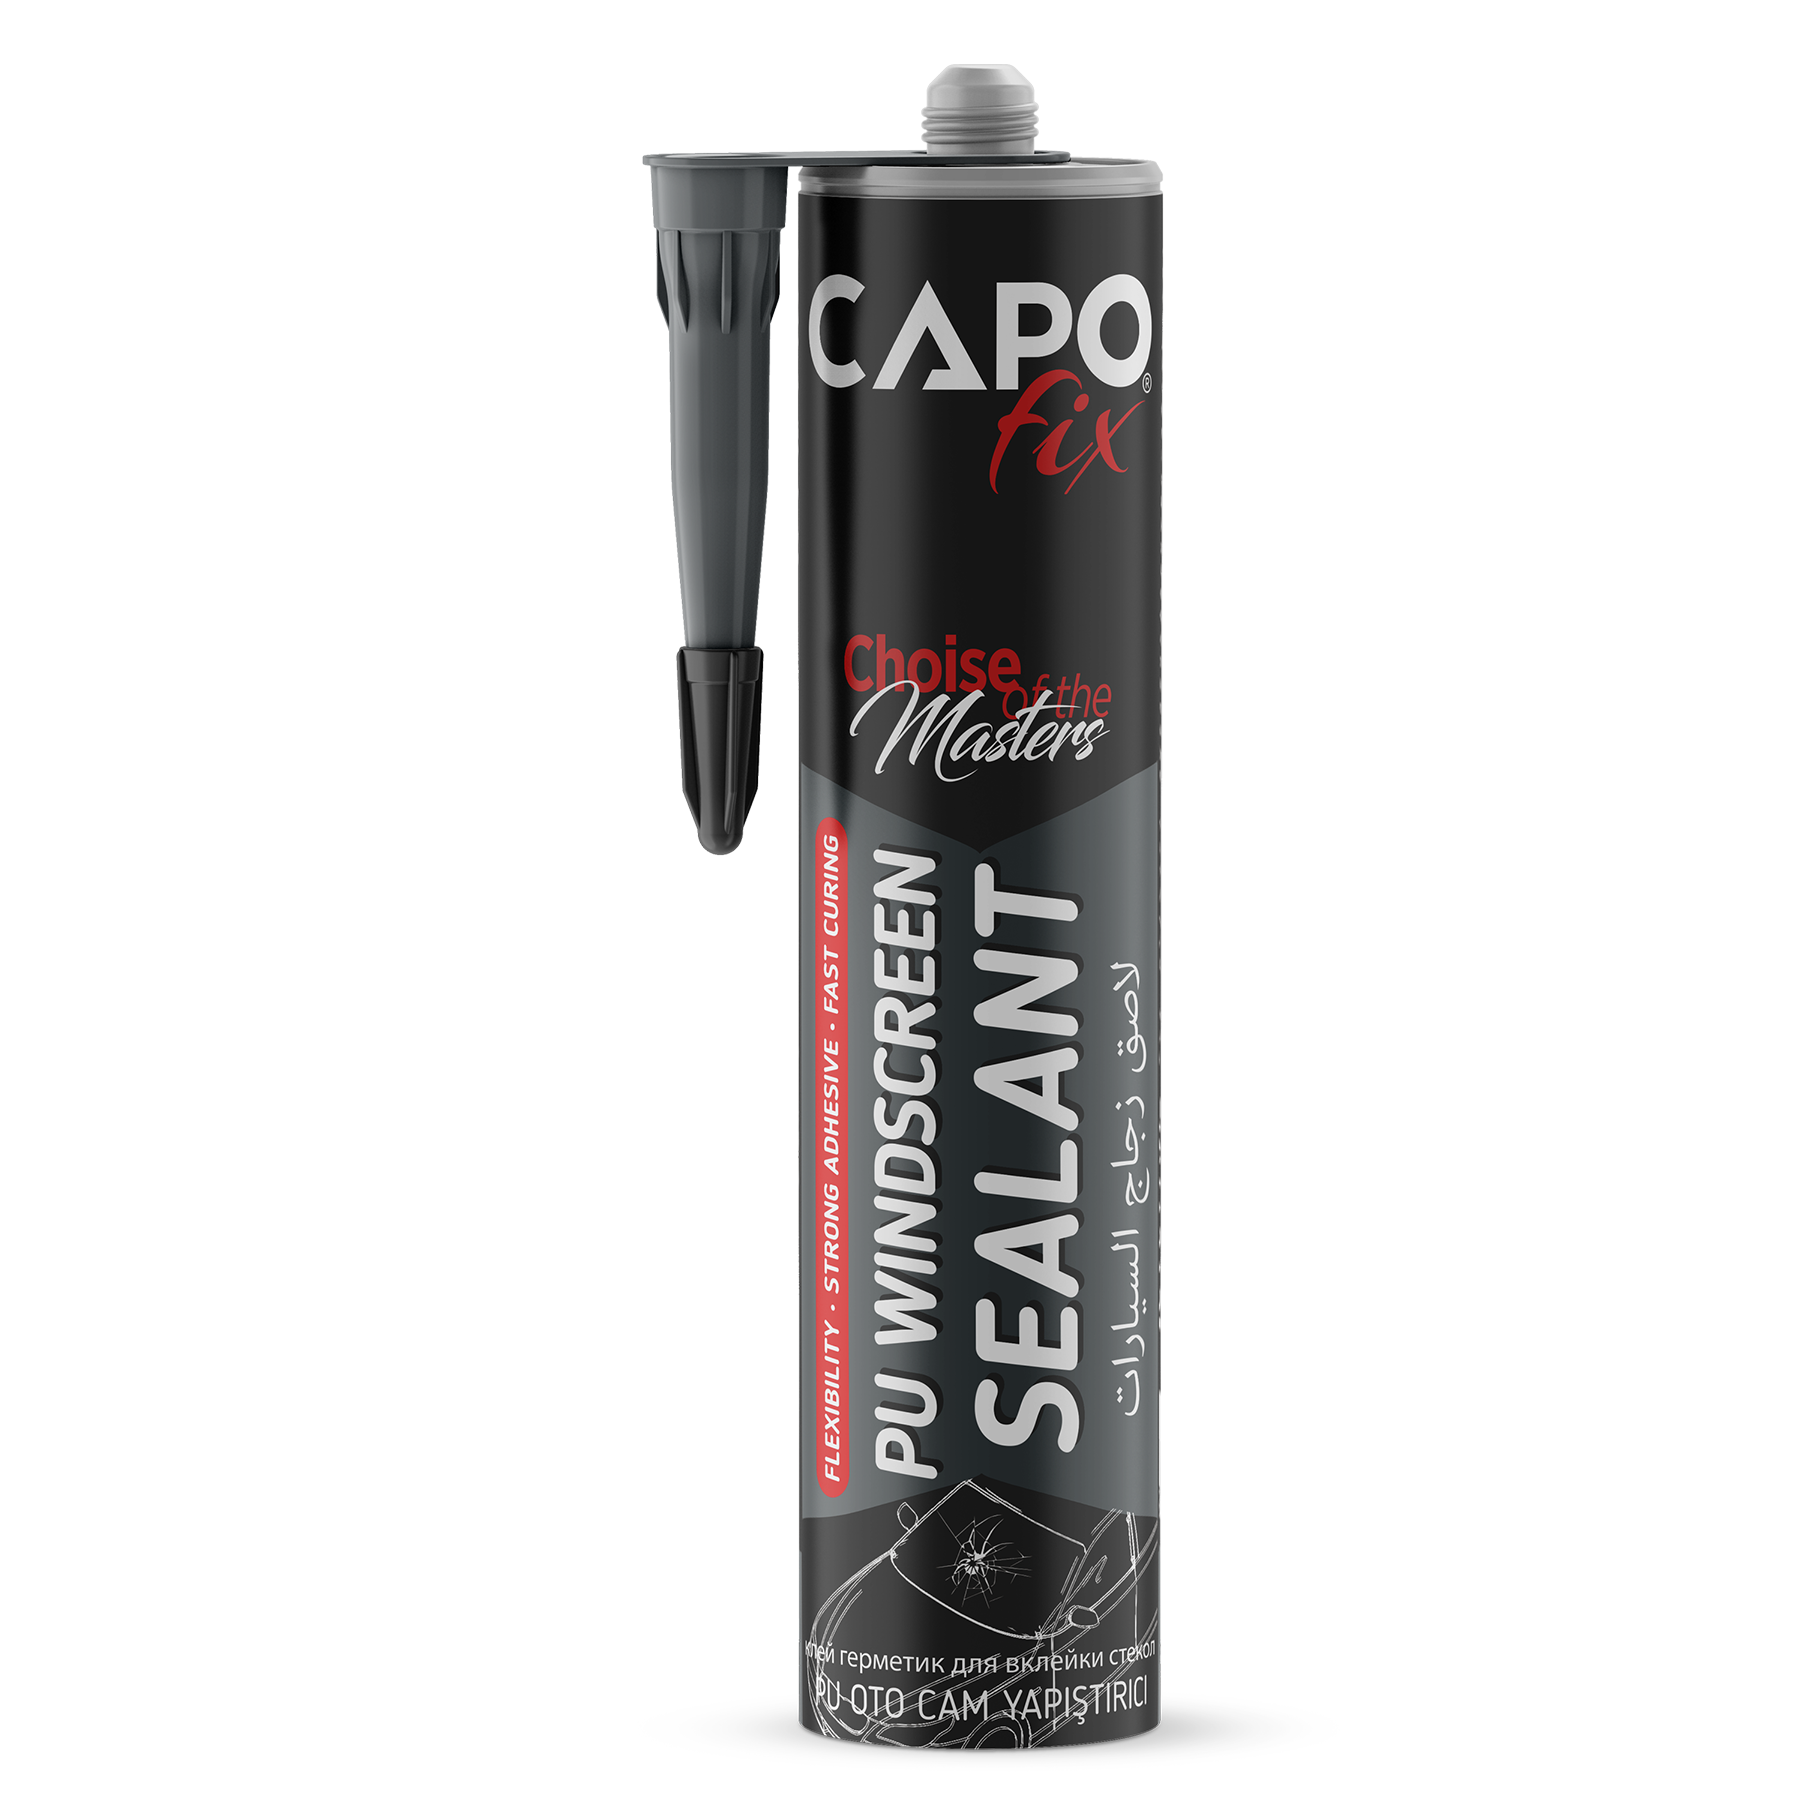 .CAPO fix Polyurethane Windscreen Adhesive.